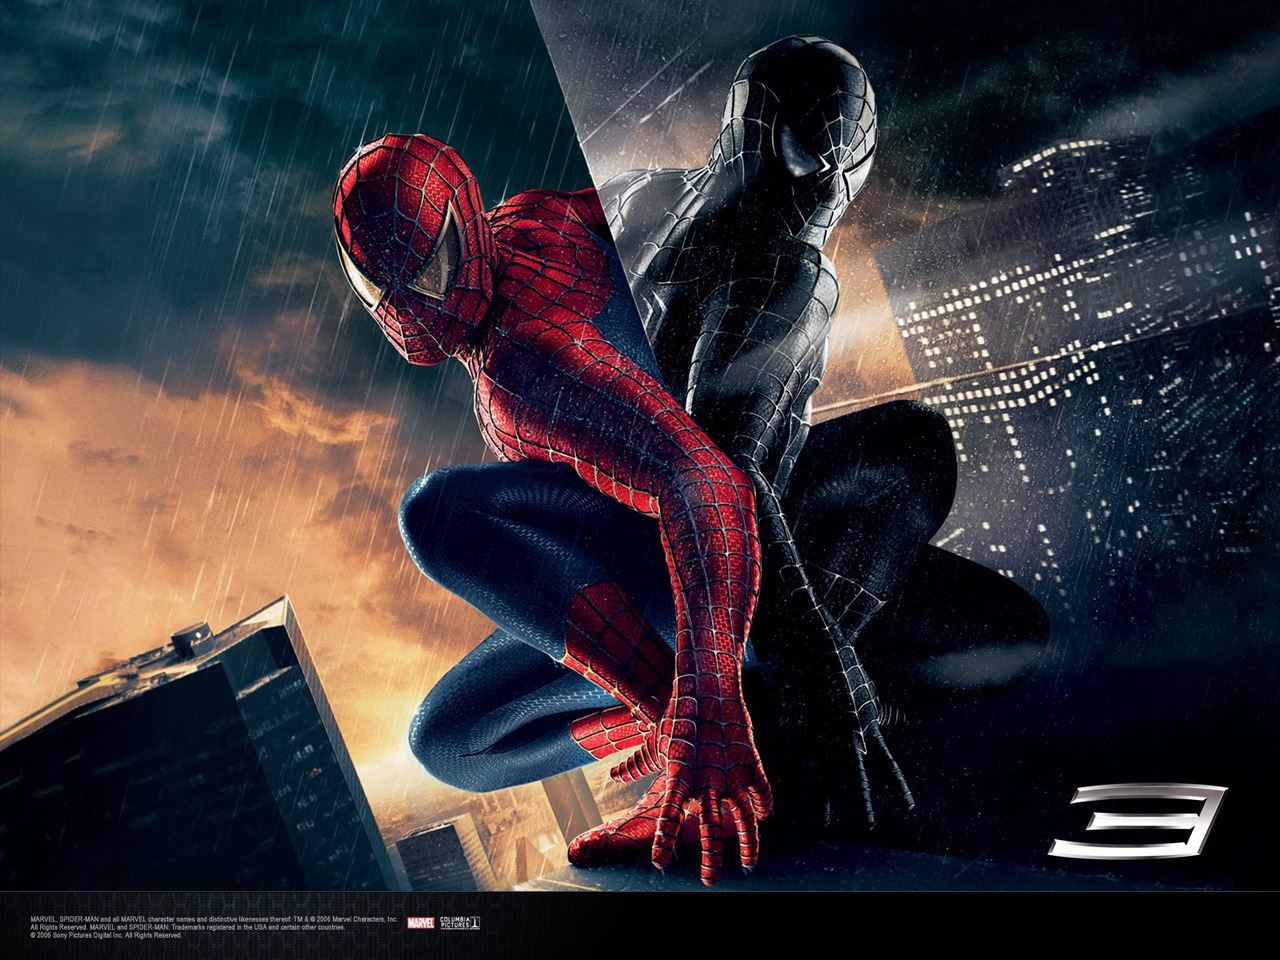 "Spider-Man 3" desktop wallpaper (1280 x 960 pixels)